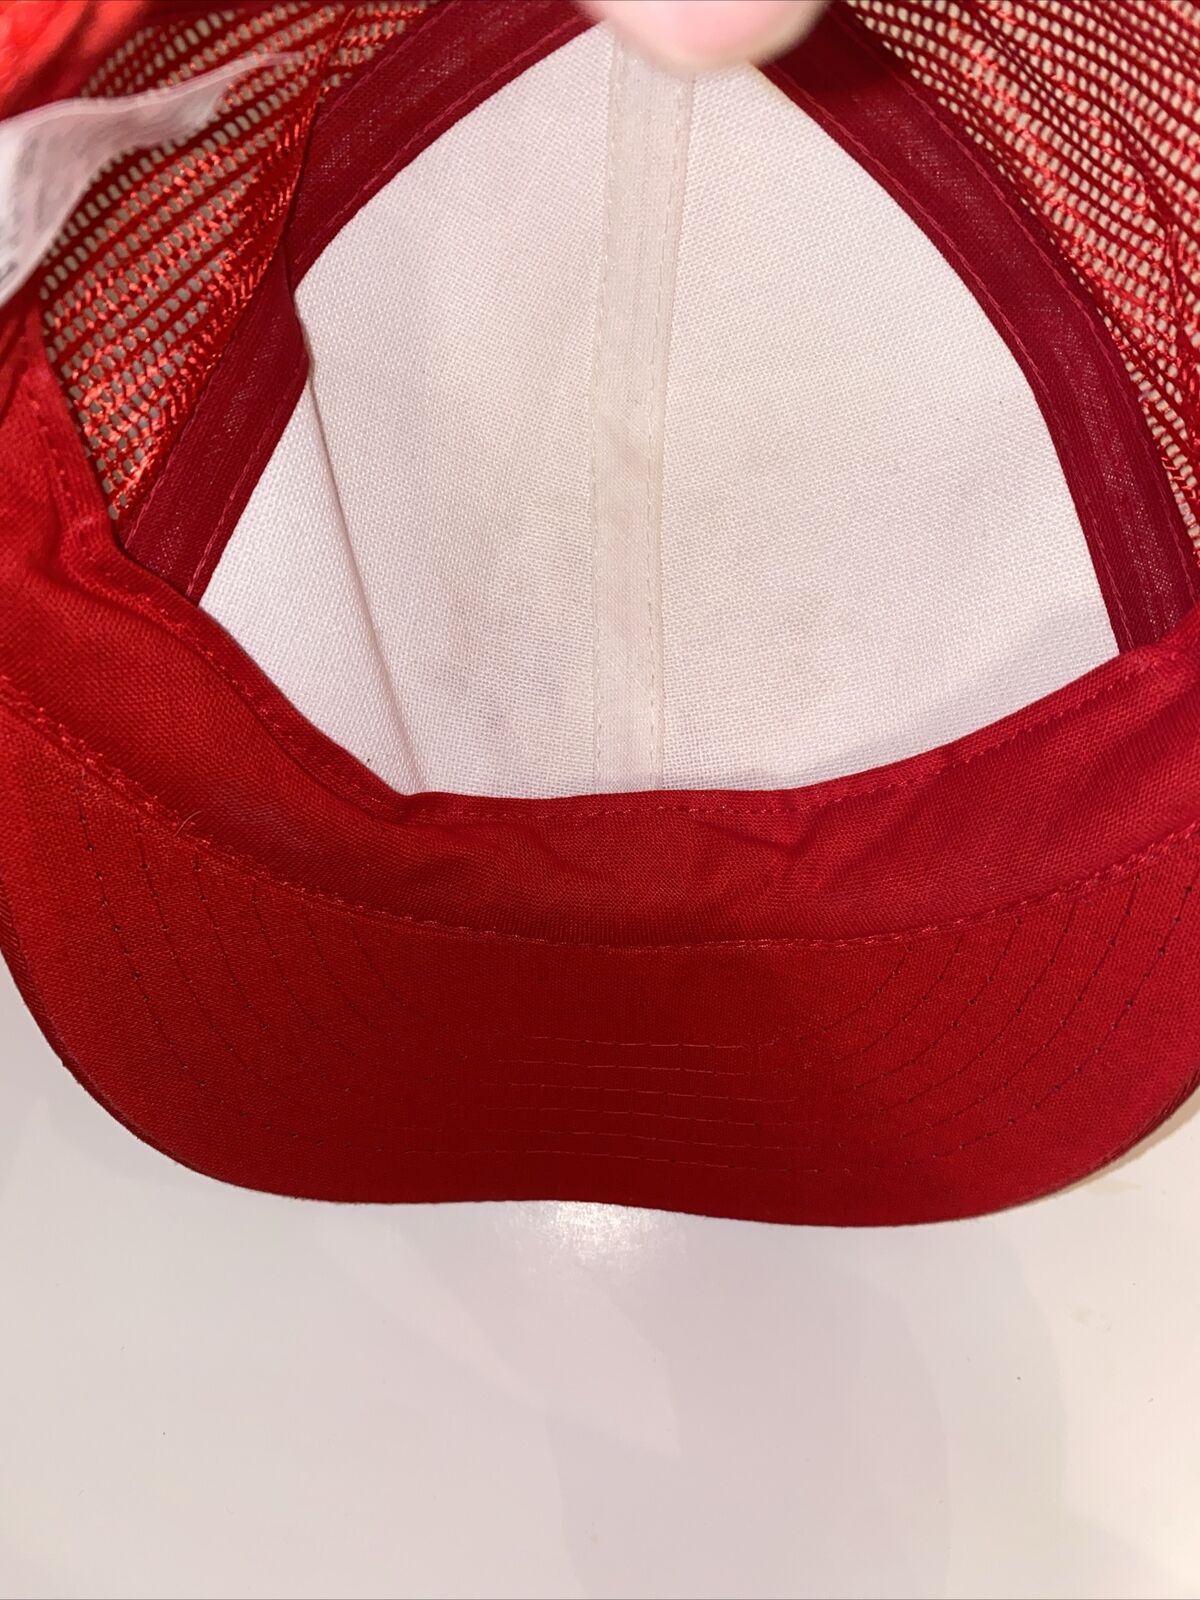 VINTAGE Canada Trucker Hat Red Mesh Cap SnapBack … - image 9